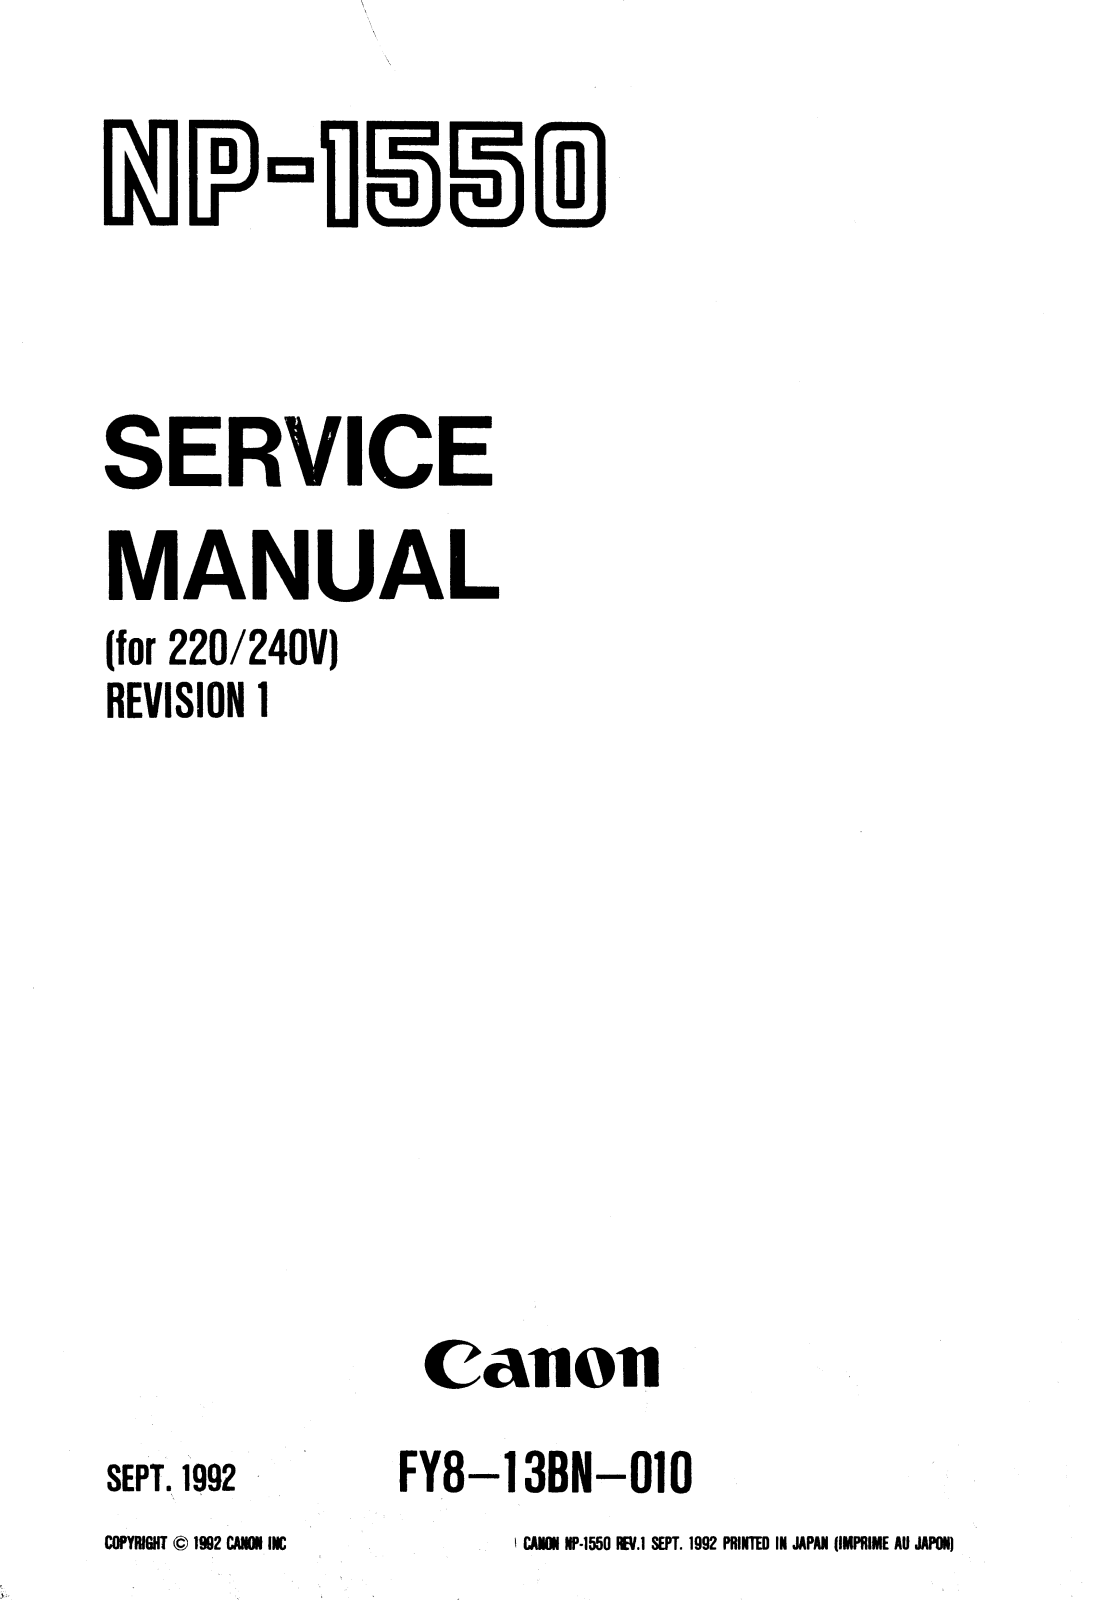 Canon NP-1550 Service manual